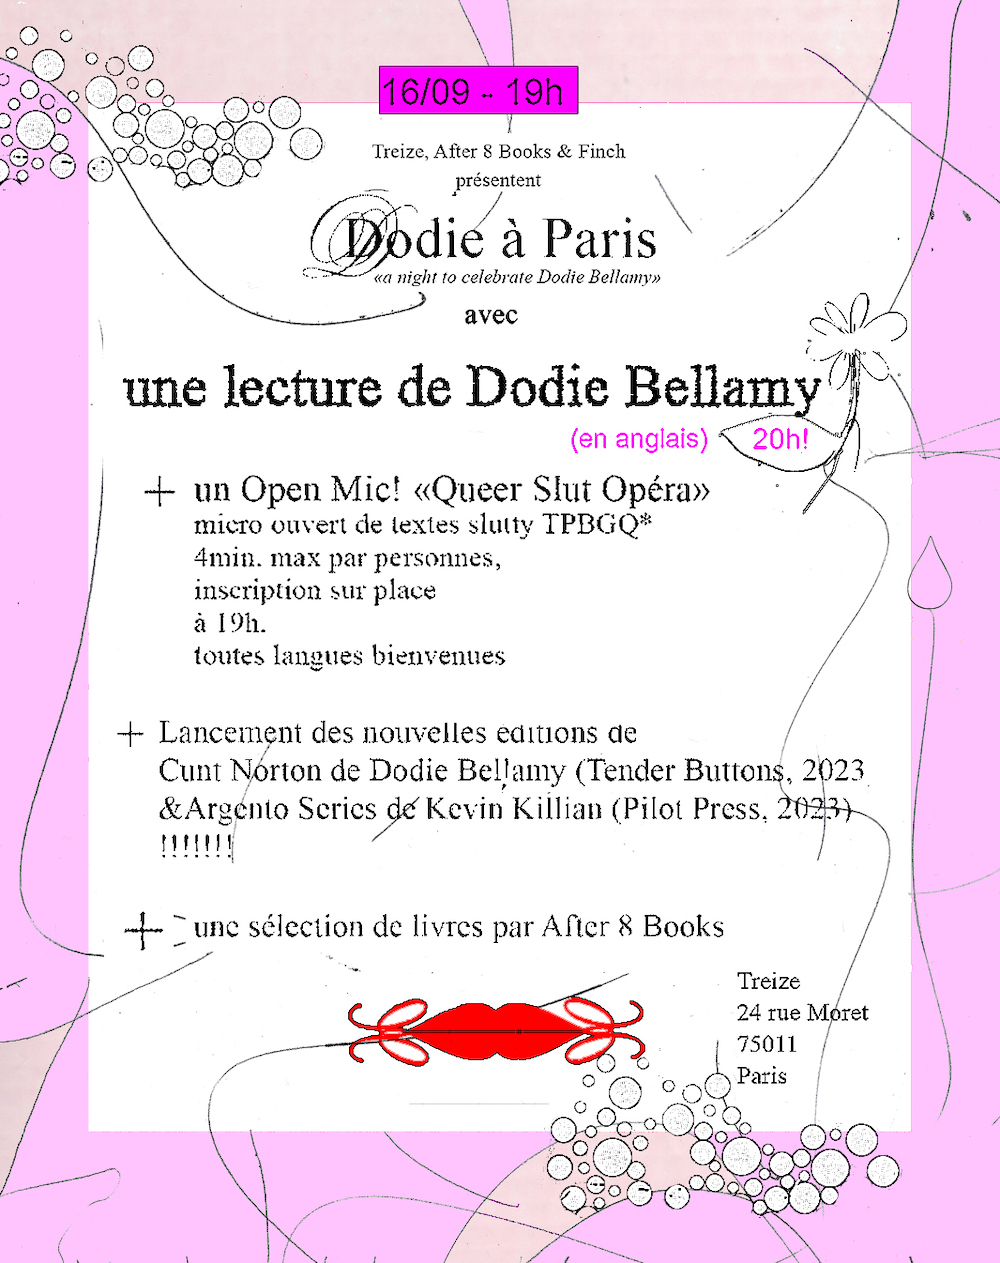  - A night to celebrate Dodie Bellamy at Treize!